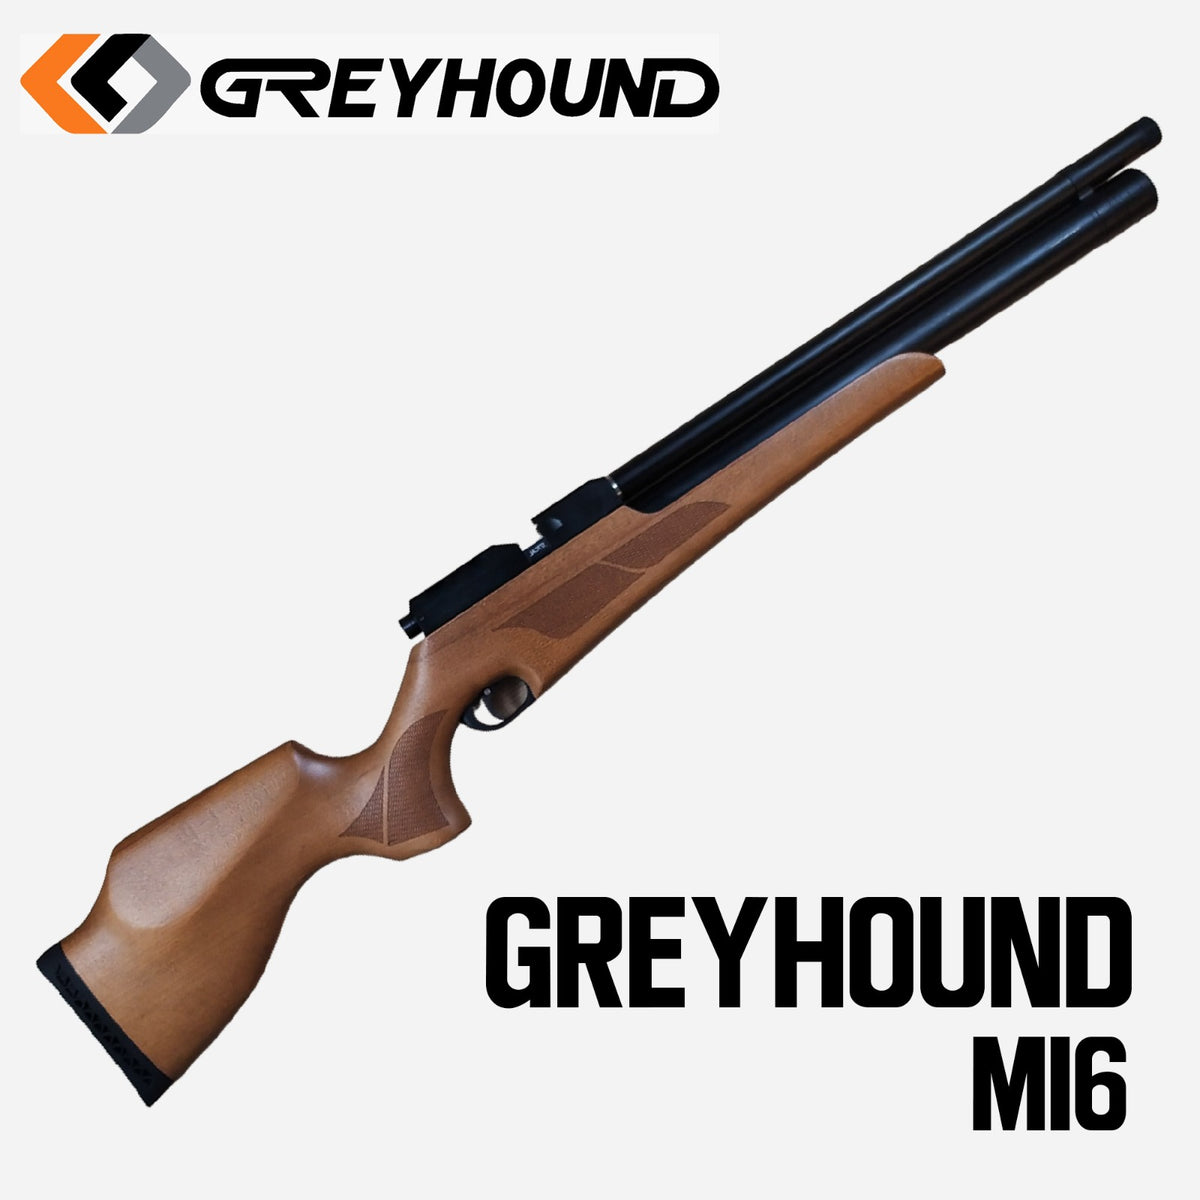 GREYHOUND M16 (SE909)